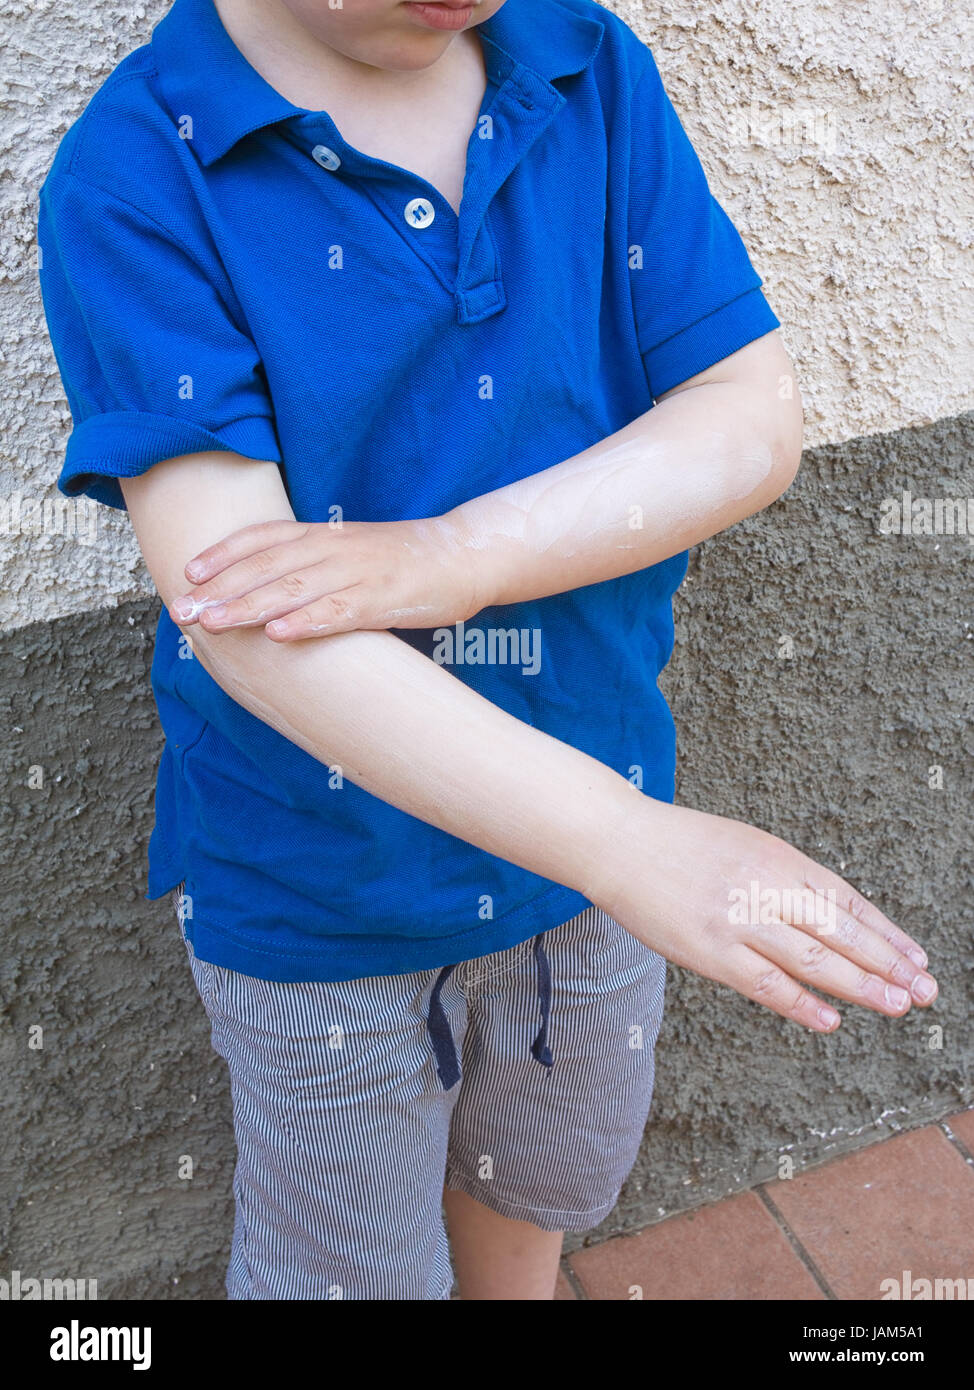 Small boy applying sun protection. Summer holiday. Stock Photo